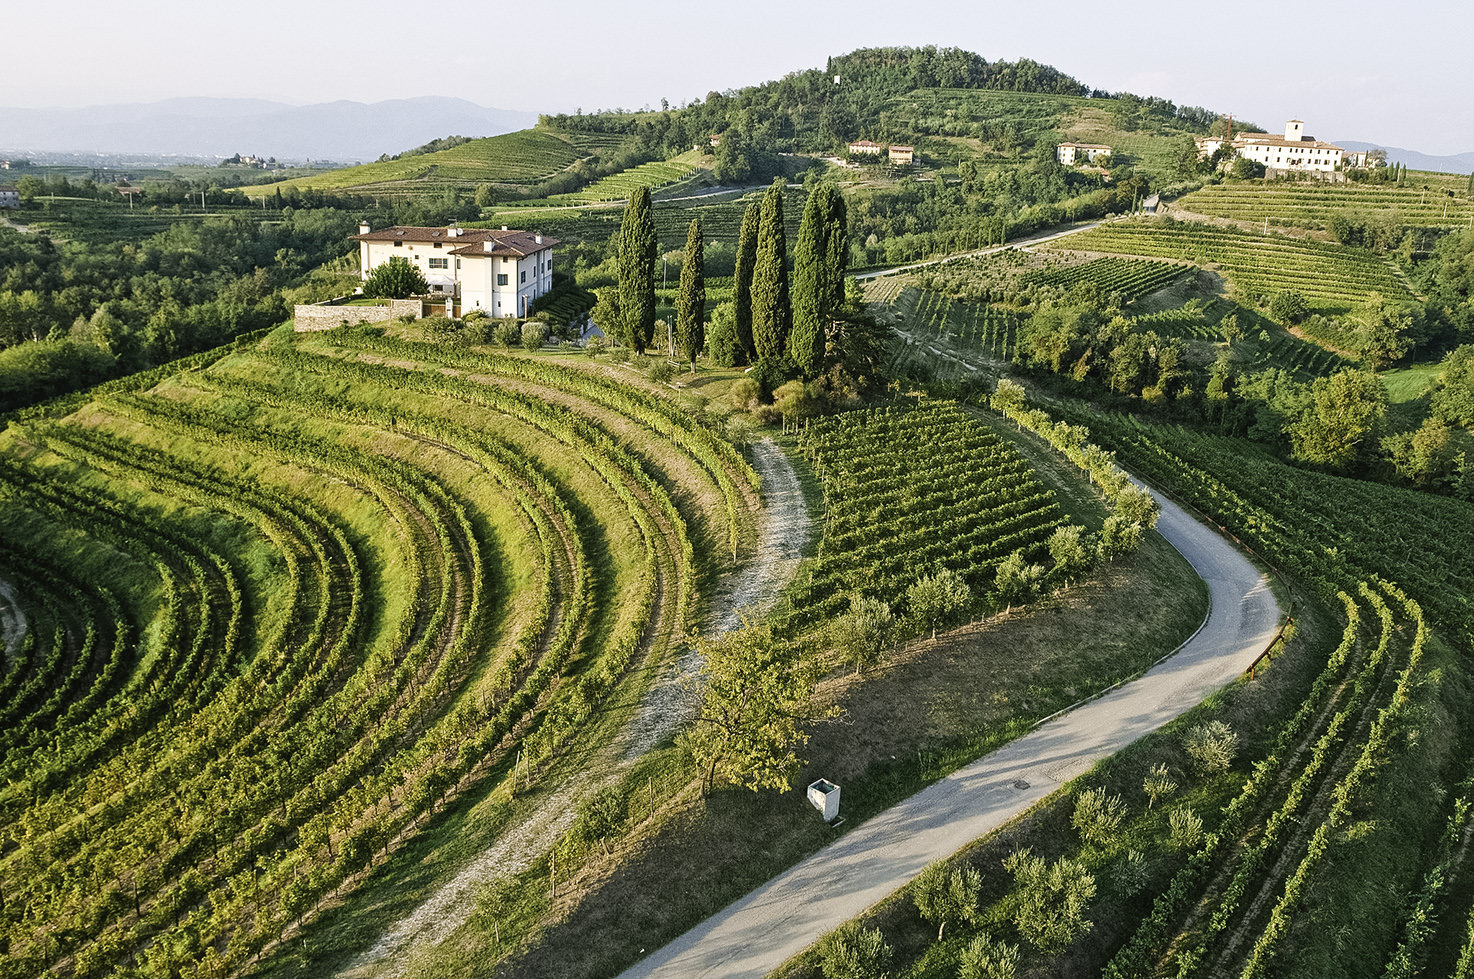 Vineyard covered hills in the Collio region of Friuli